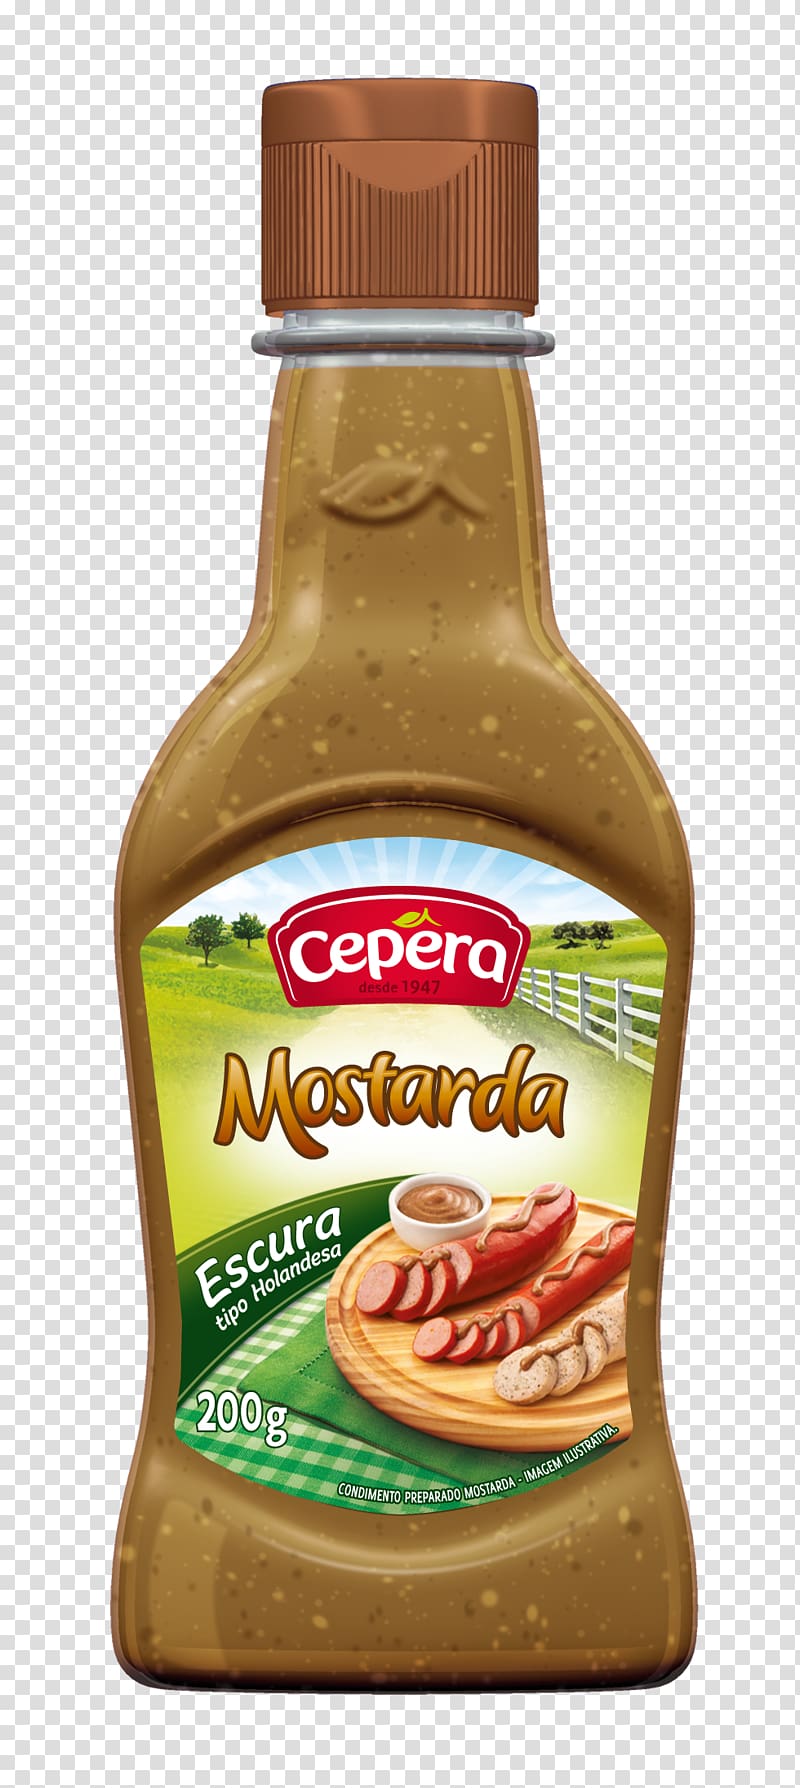 Ketchup Mustard Worcestershire sauce Flavor, Mostarda transparent background PNG clipart